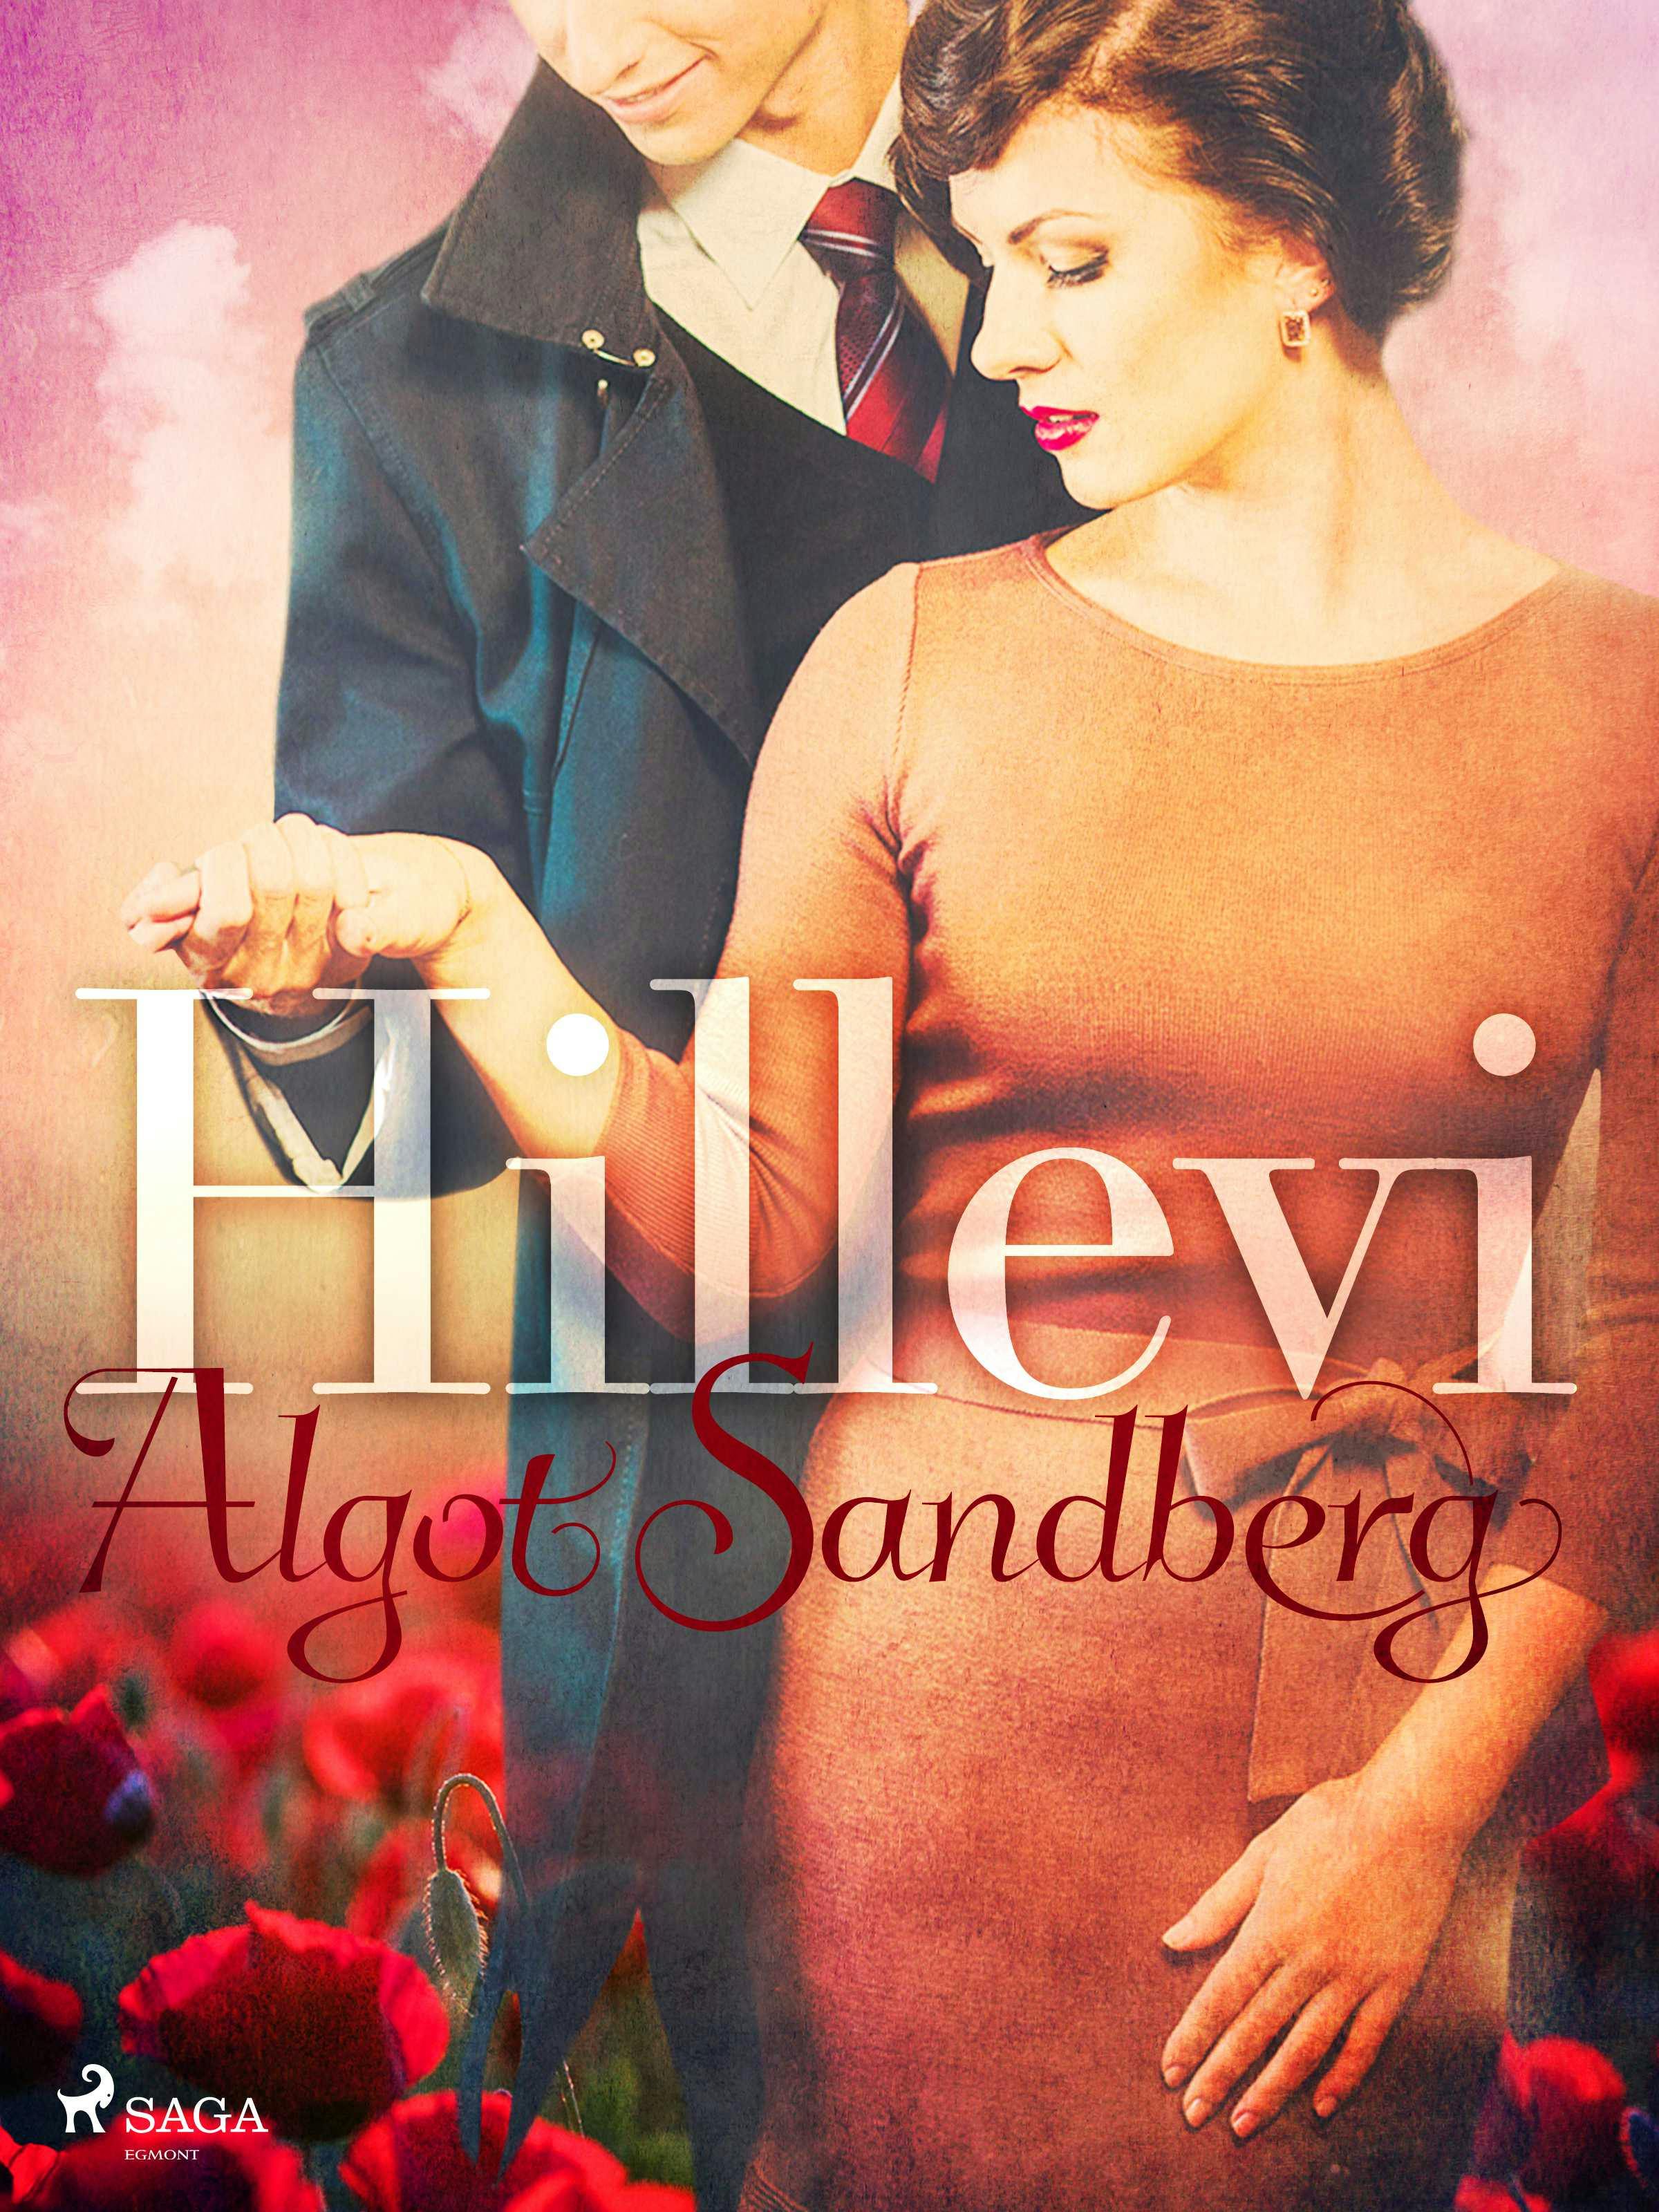 Hillevi - Algot Sandberg